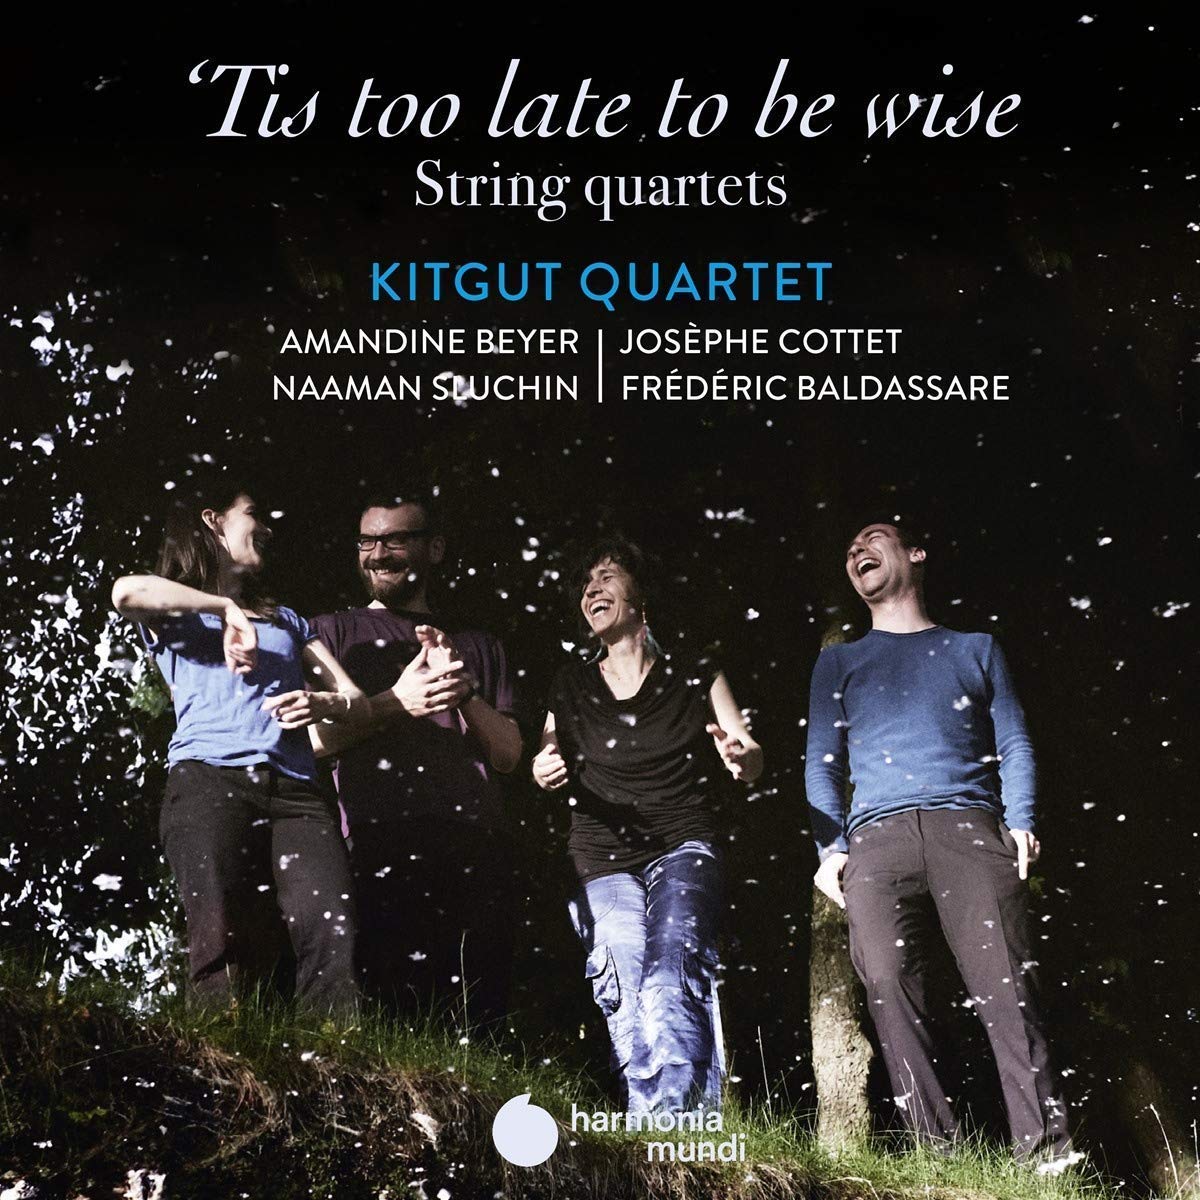 HMM90 2313. 'Tis too late to be wise (Kitgut Quartet)